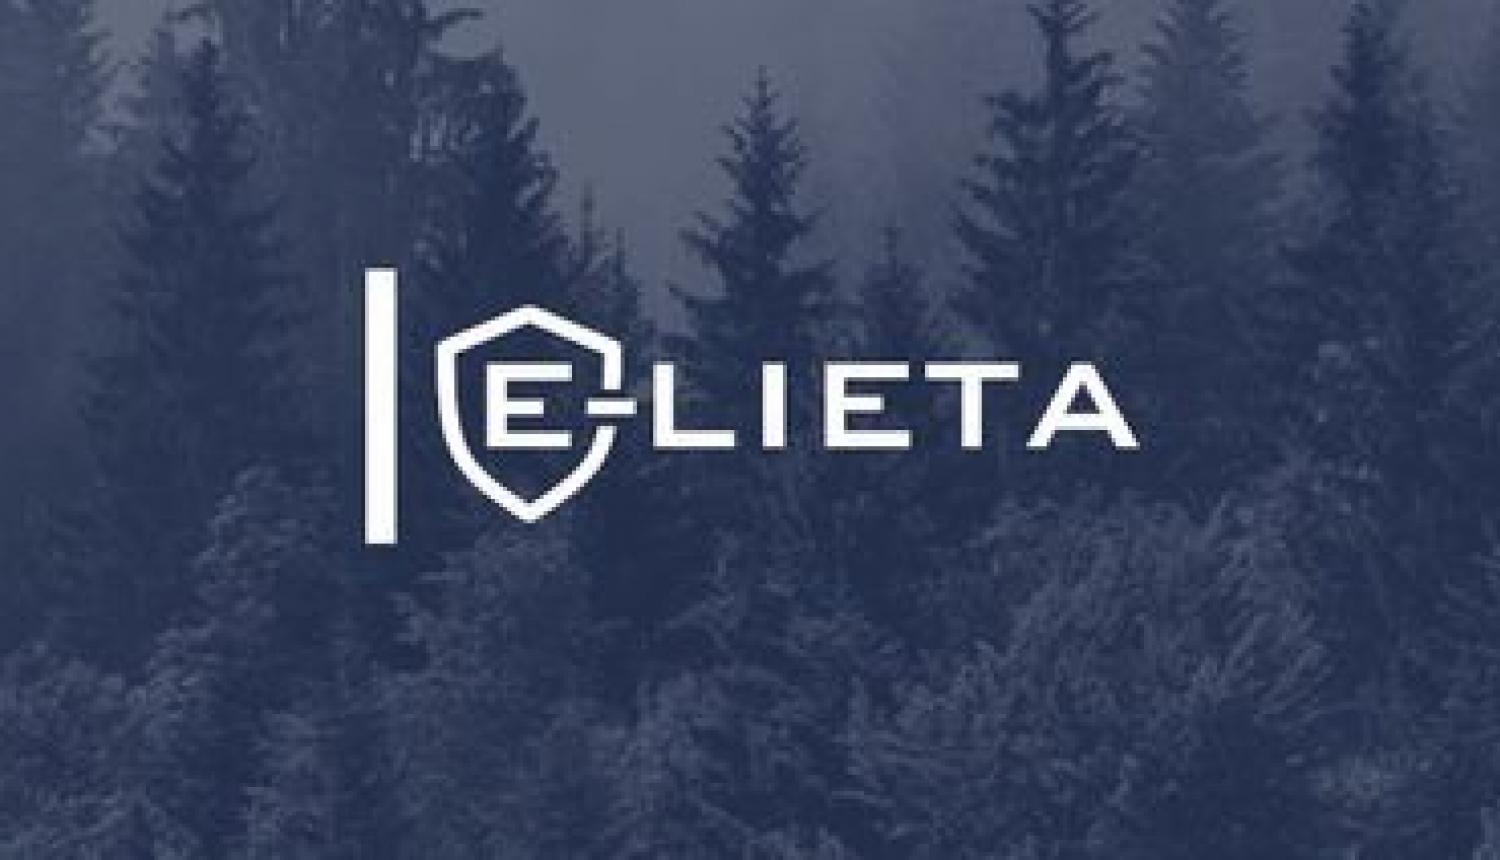 E-Lieta